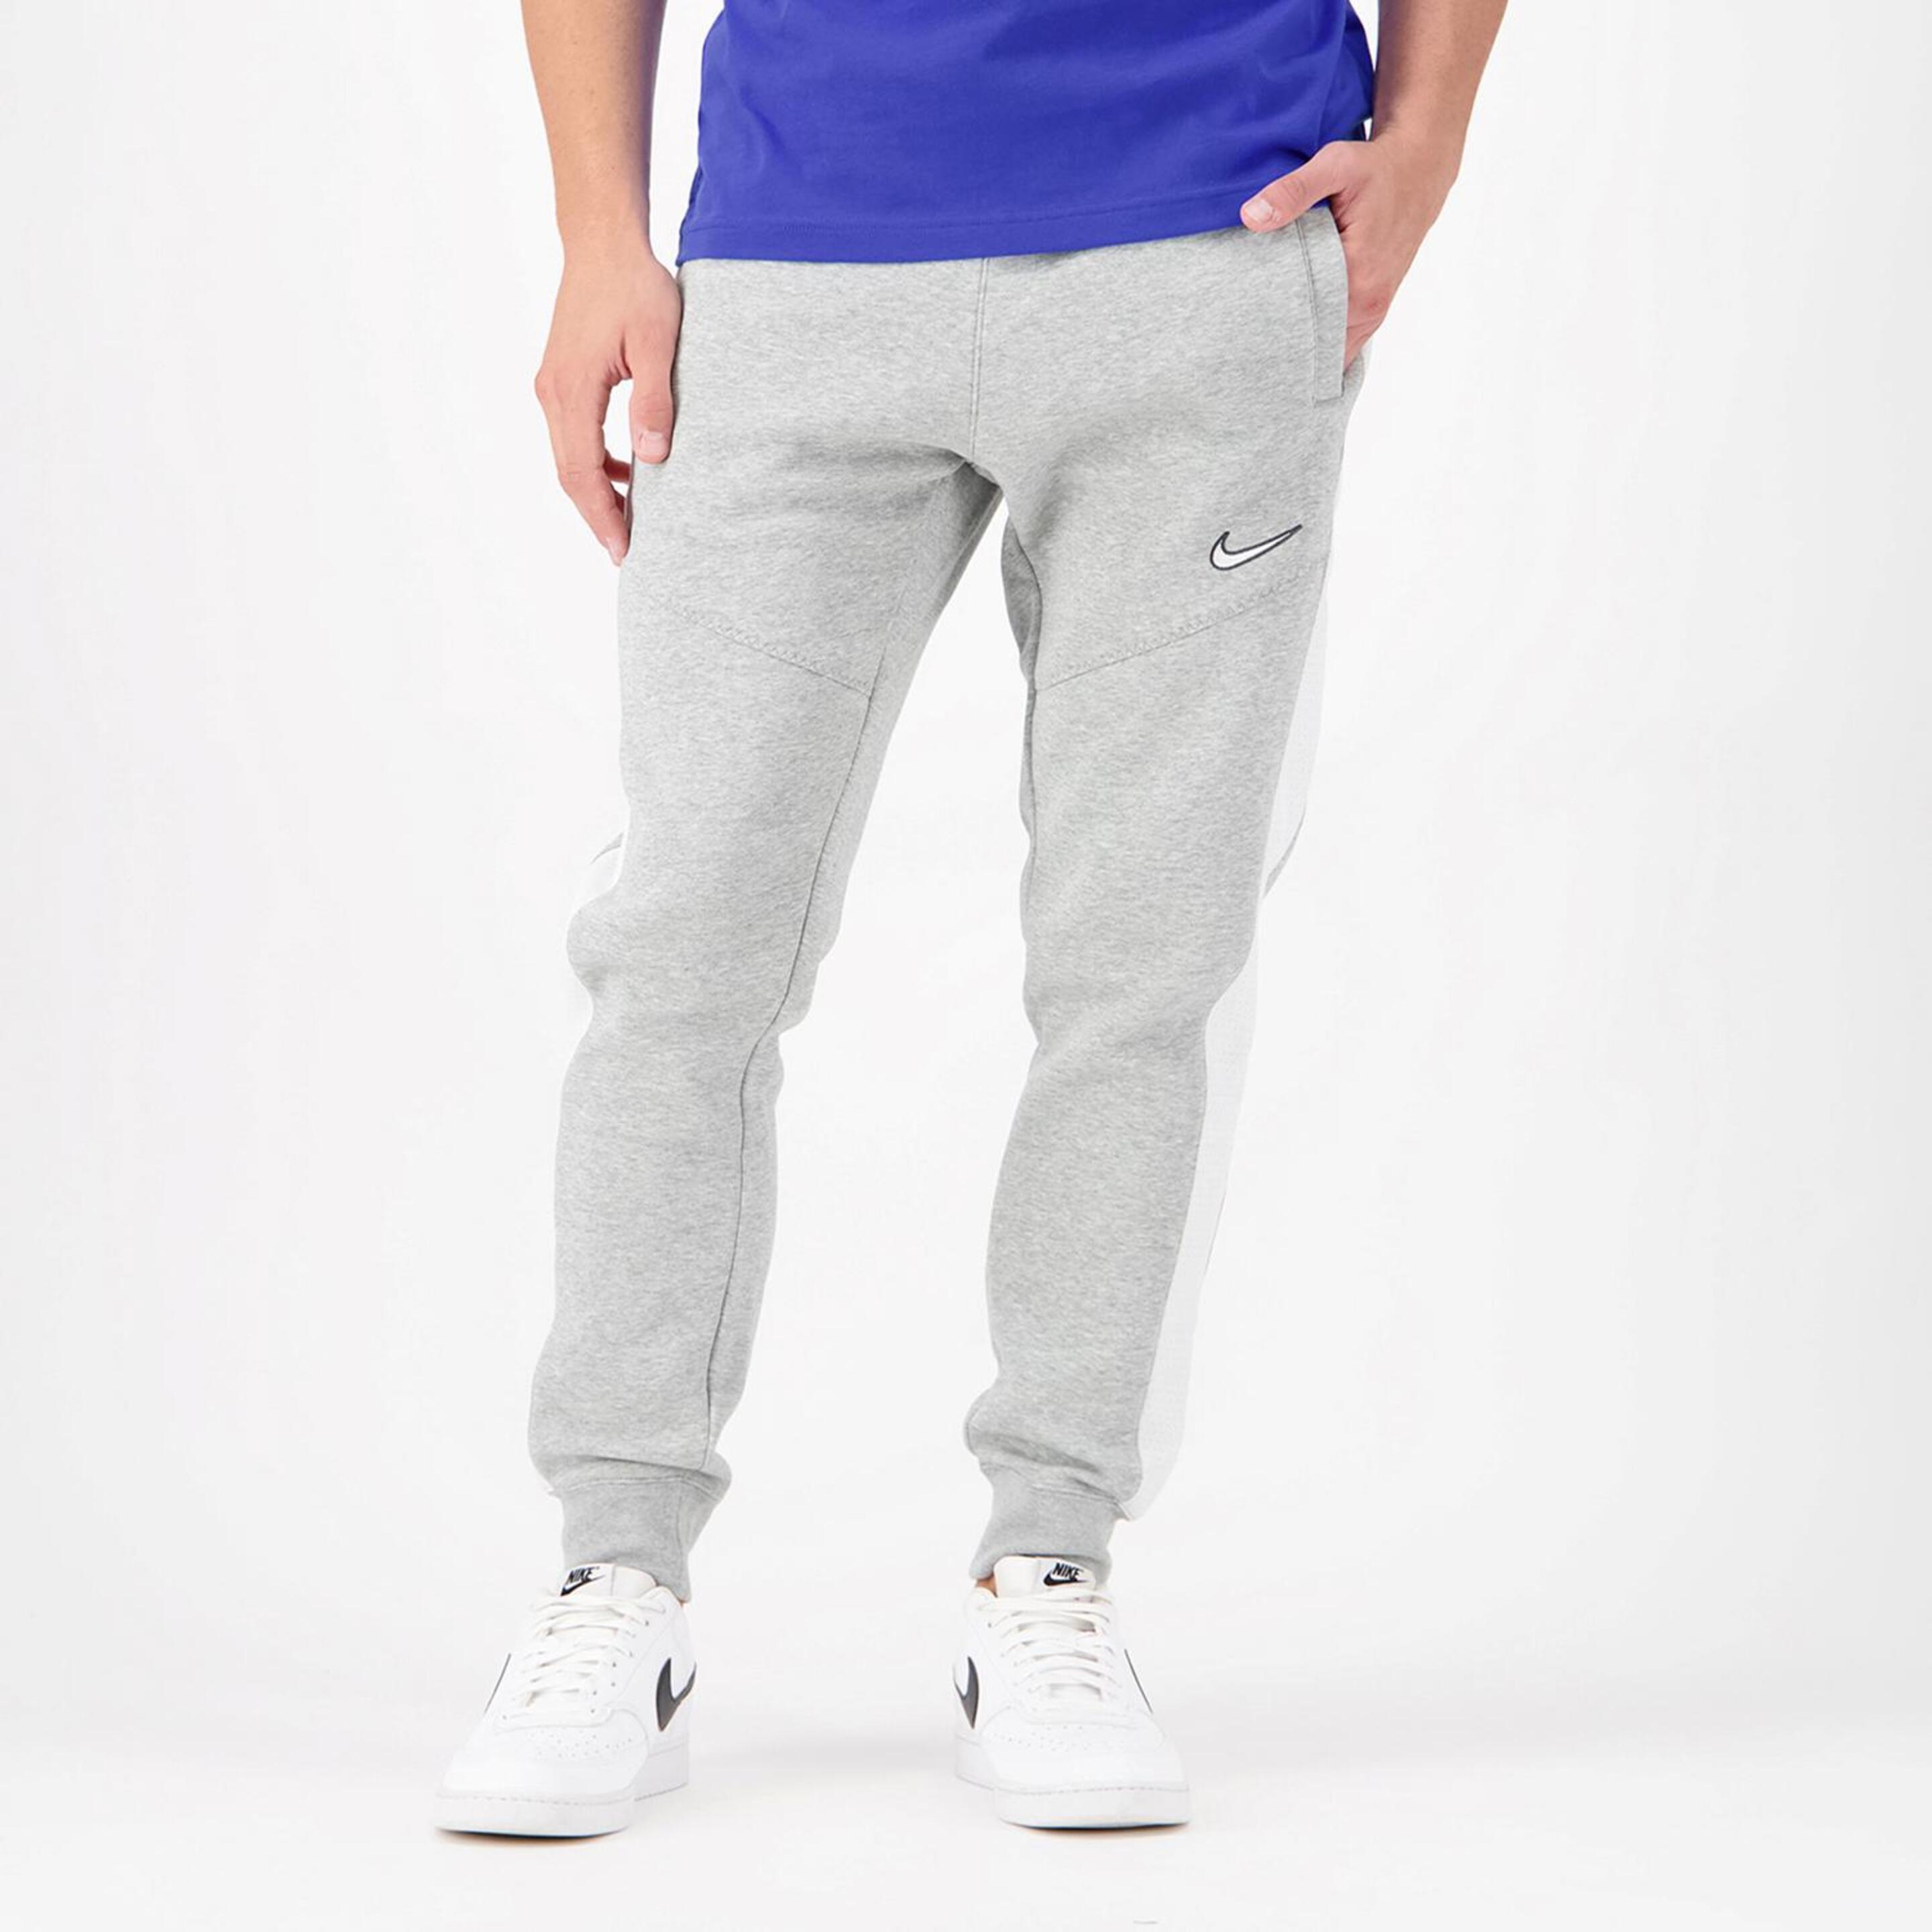 Pantalón Nike - gris - Pantalón Chándal Hombre